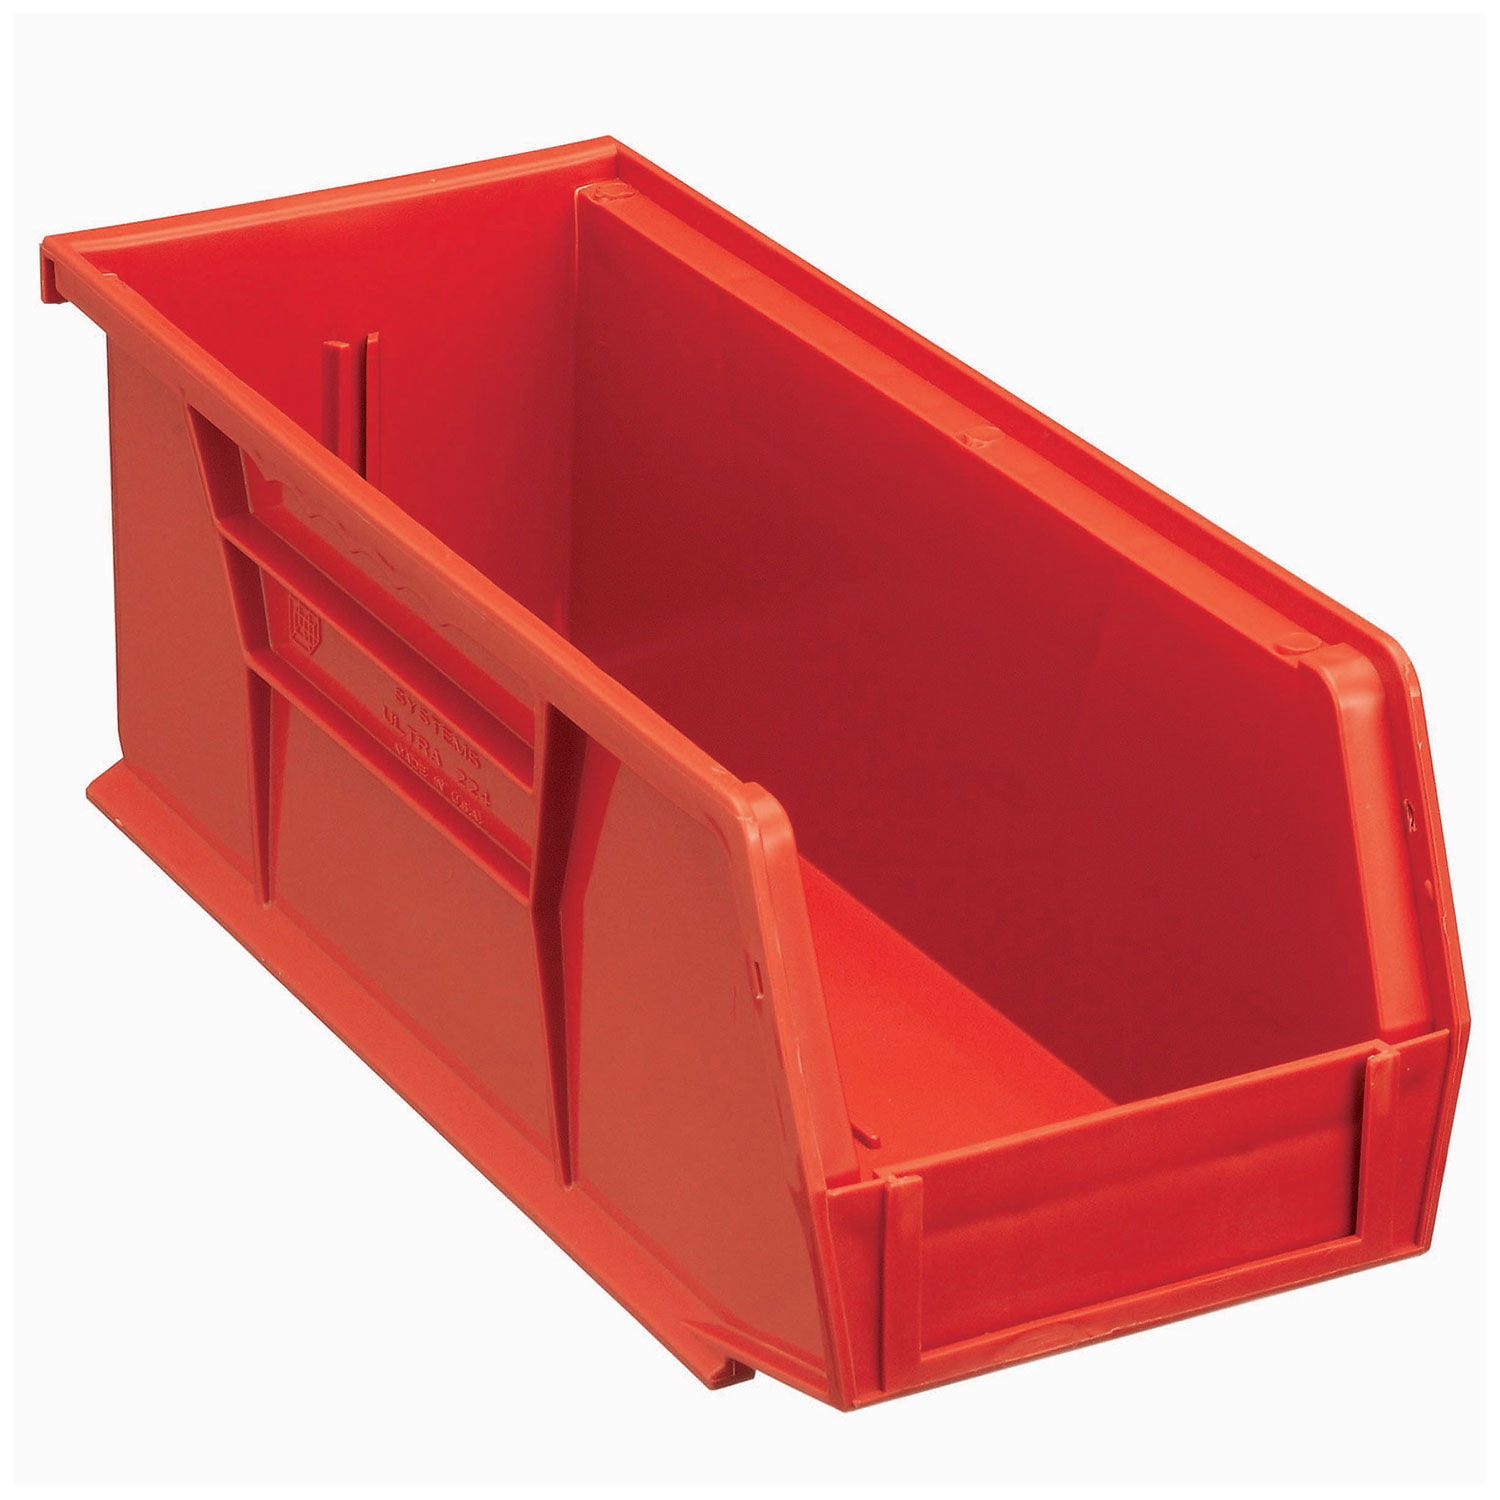 Red box Plastic Parts Storage Stacking Picking Bins 116x161x75 Details about   1 x Ergo M 